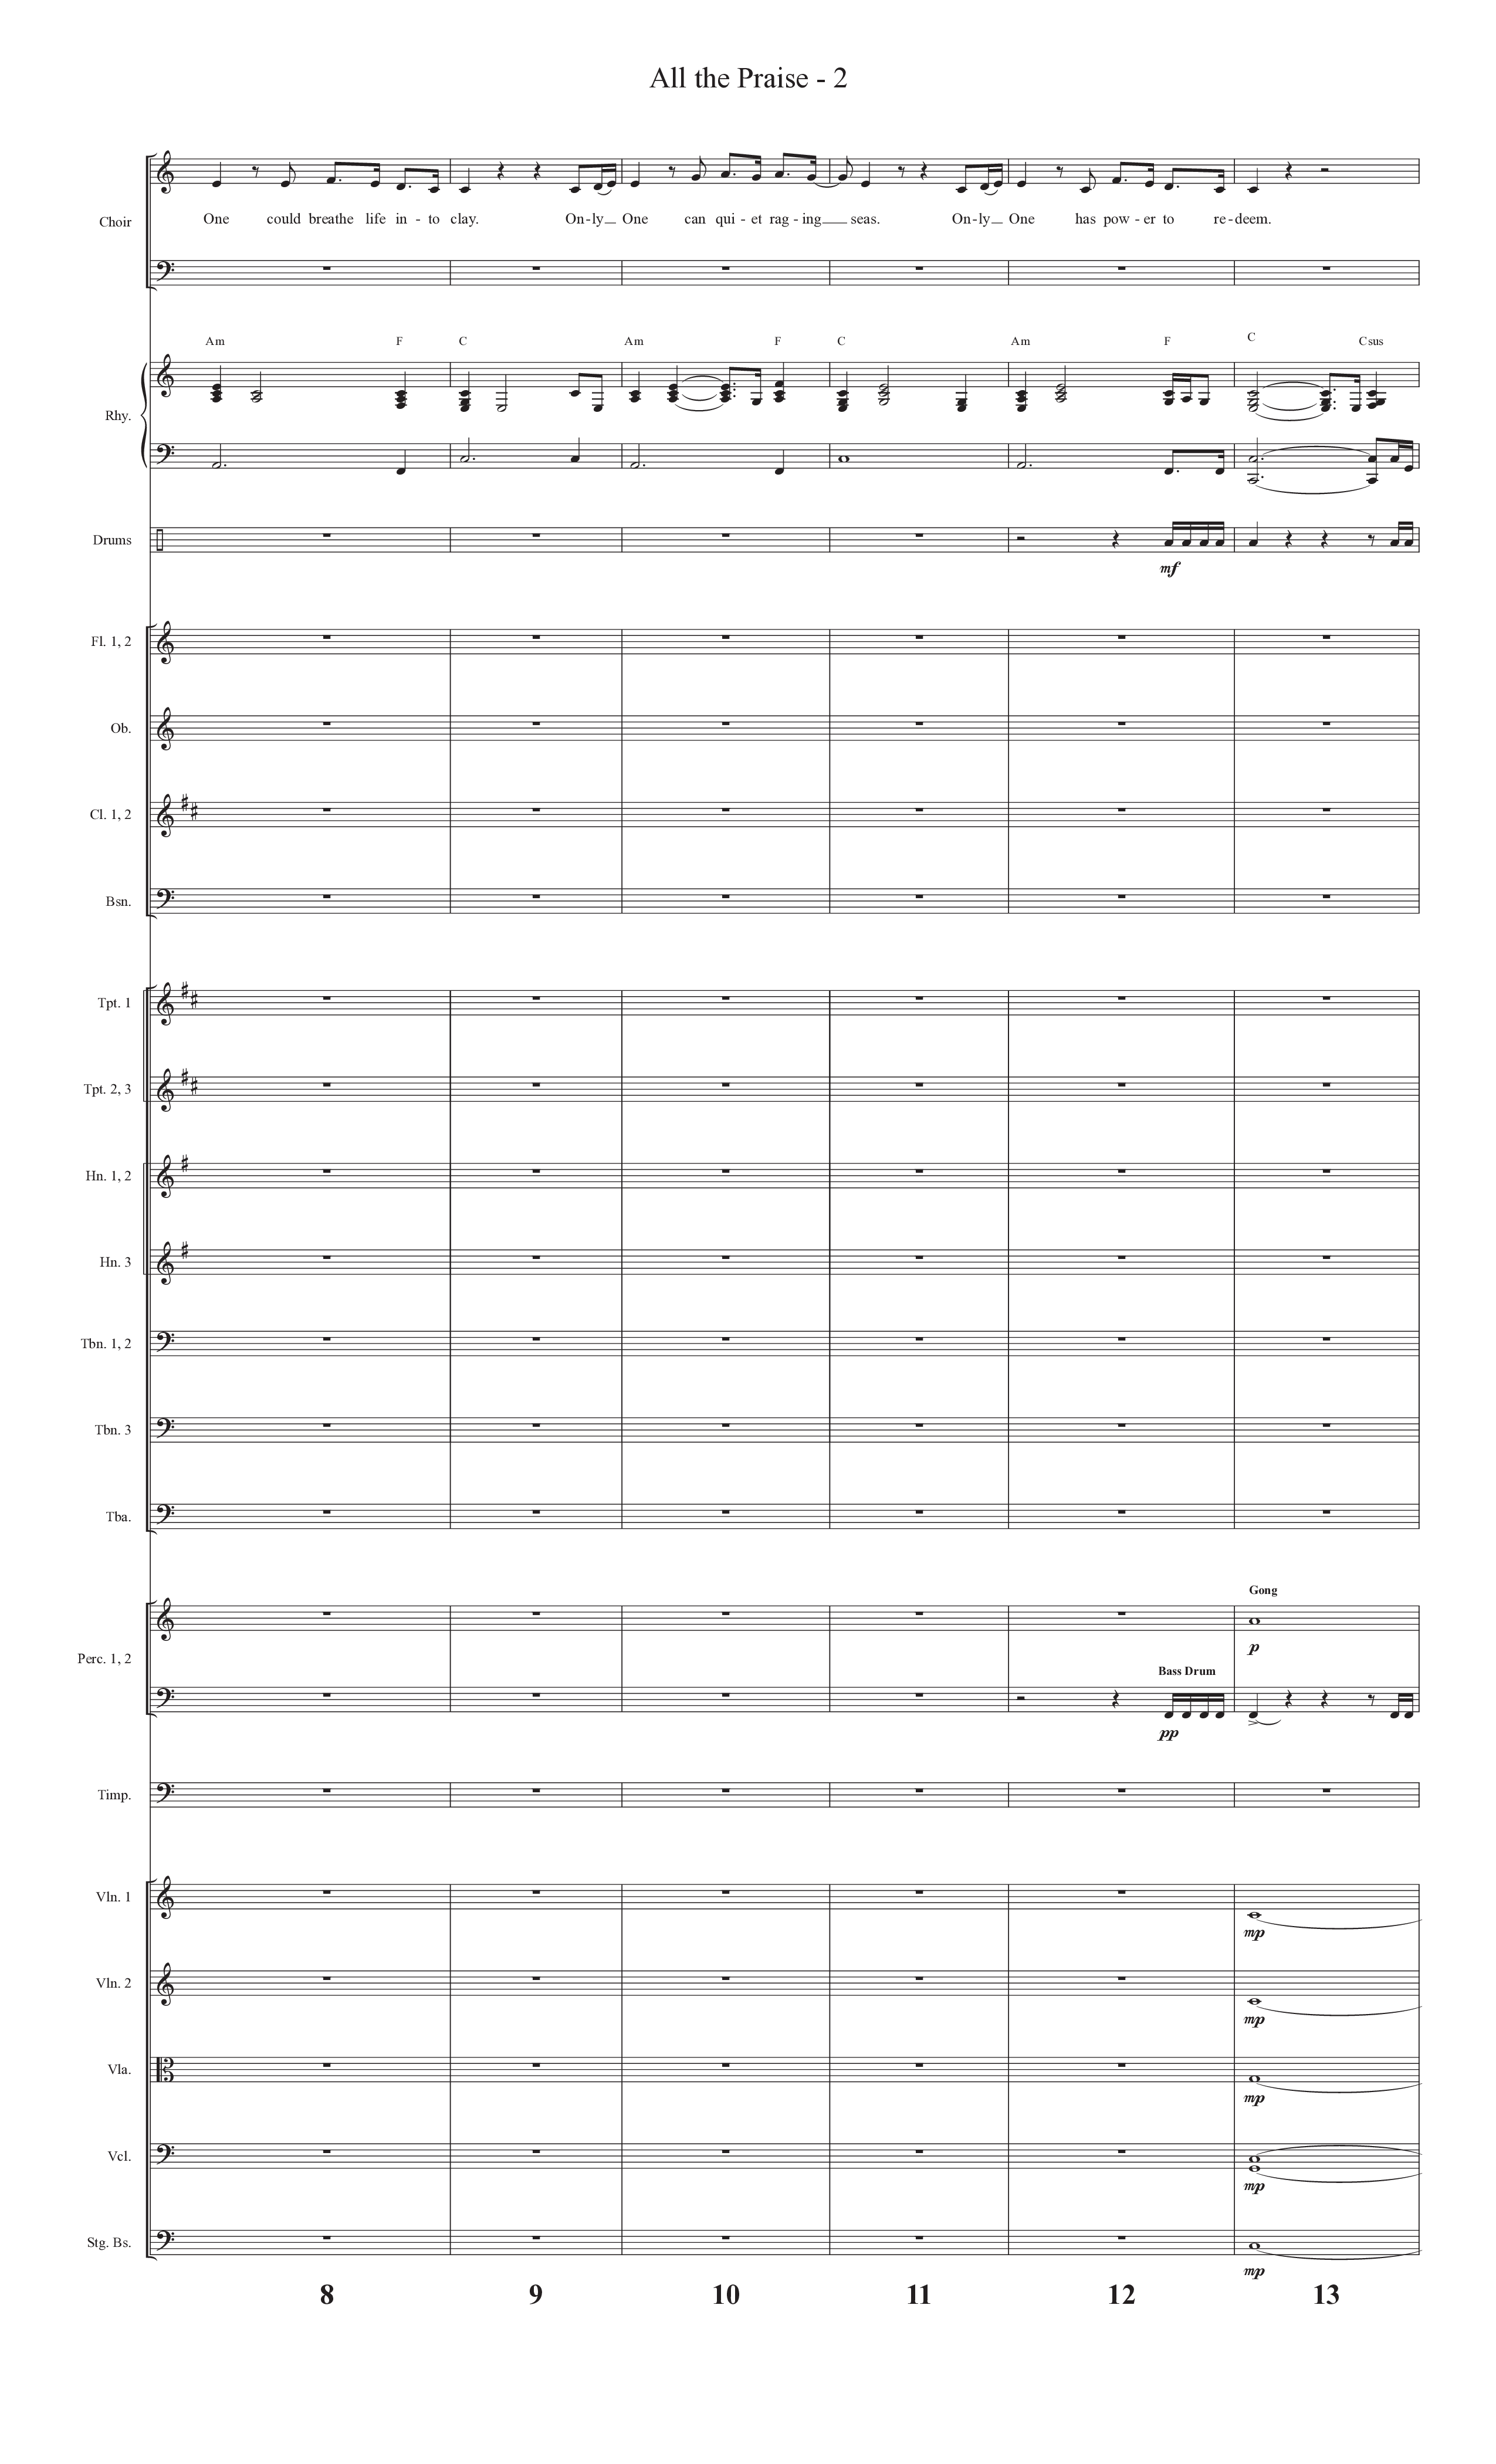 All The Praise (Choral Anthem SATB) Orchestration (Prestonwood Worship / Prestonwood Choir / Arr. Michael Neale / Orch. Carson Wagner)